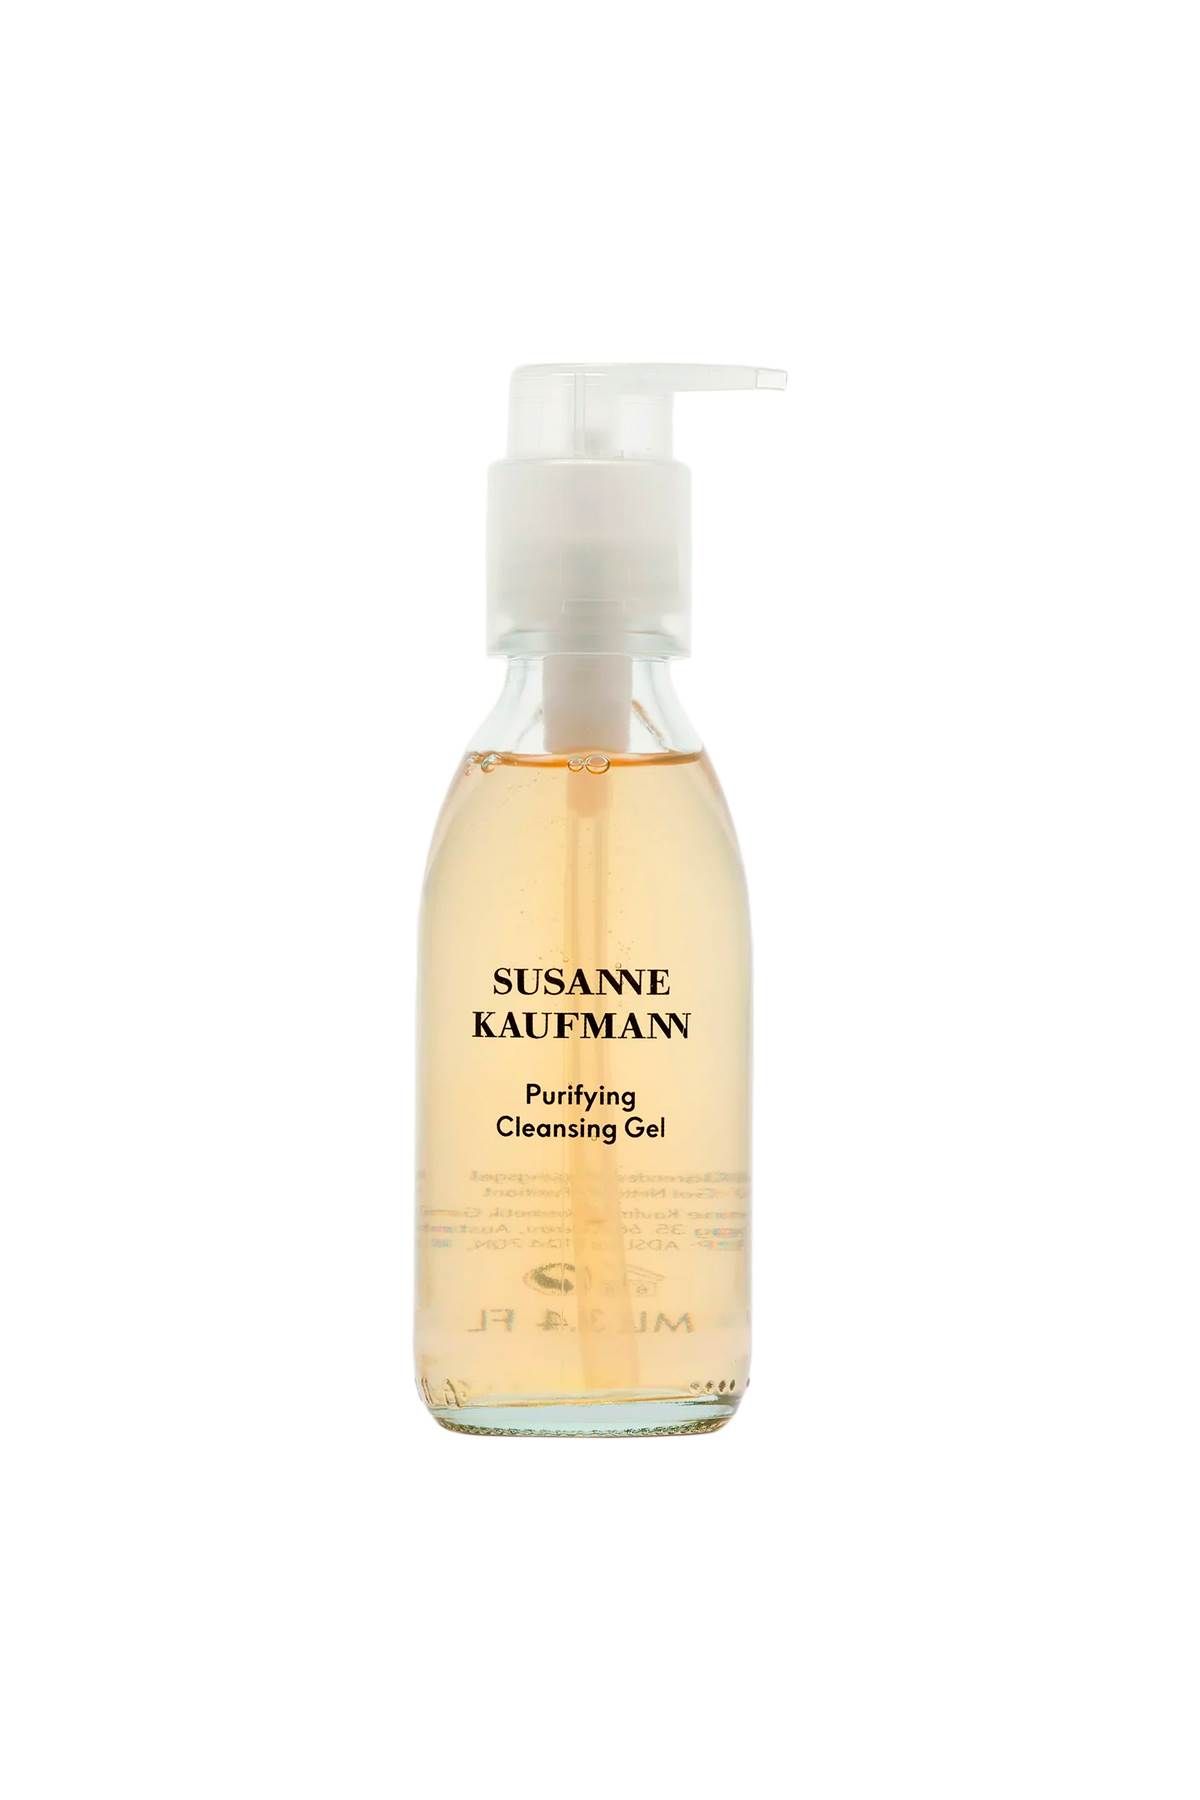 SUSANNE KAUFMANN purifying cleansing gel - 100 ml